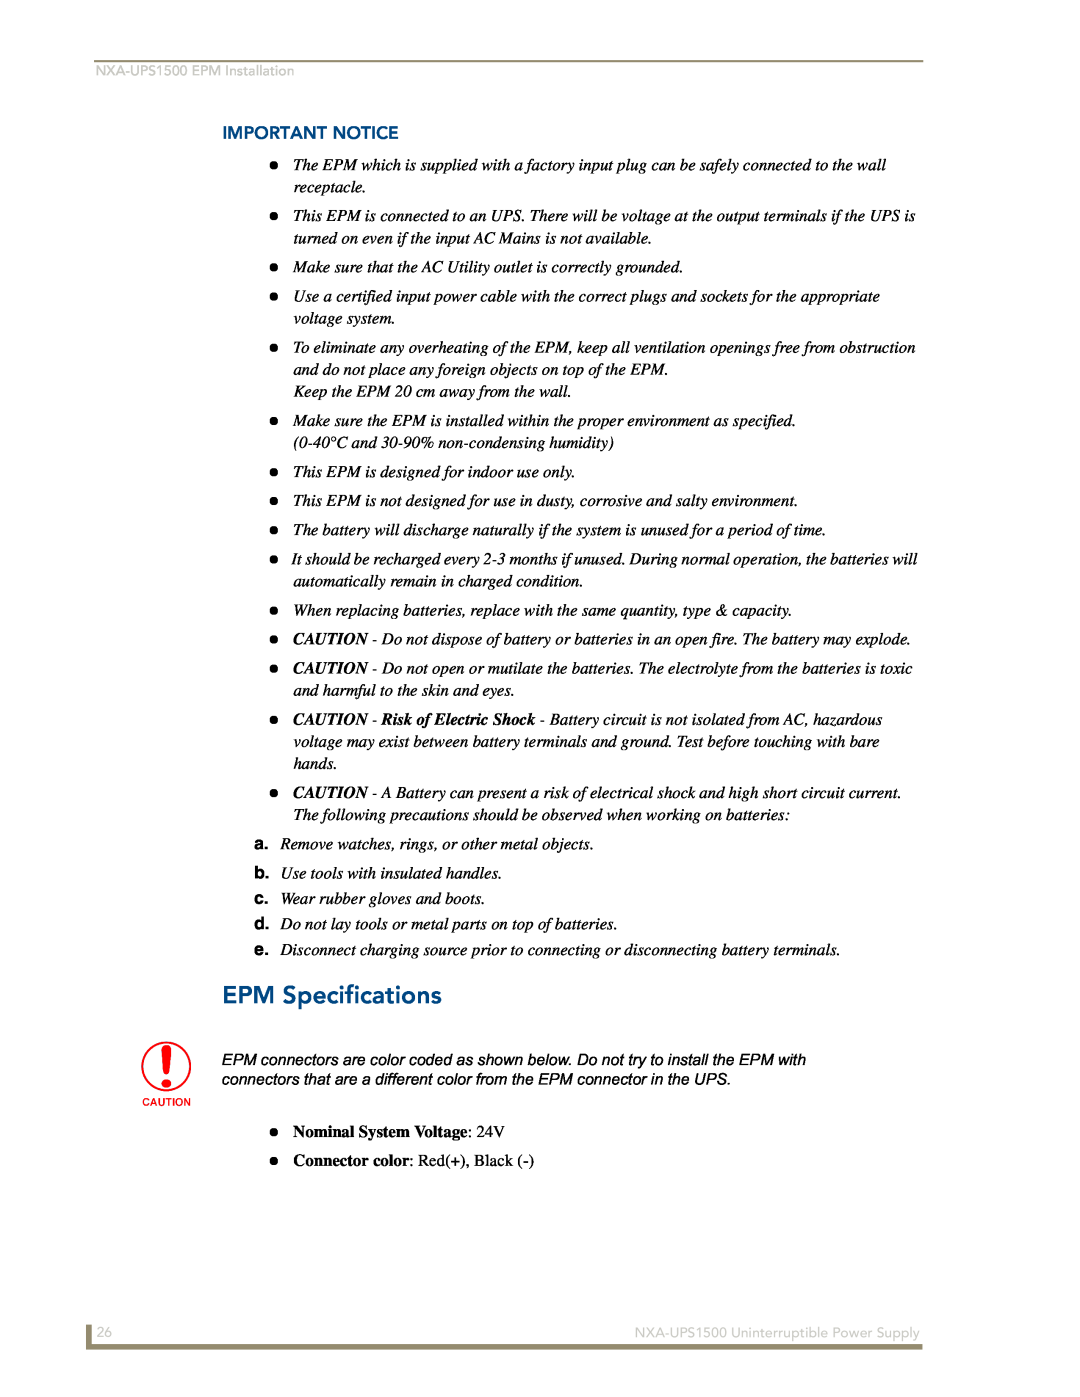 AMX NXA-UPS1500 manual EPM Specifications, Important Notice, Nominal System Voltage 